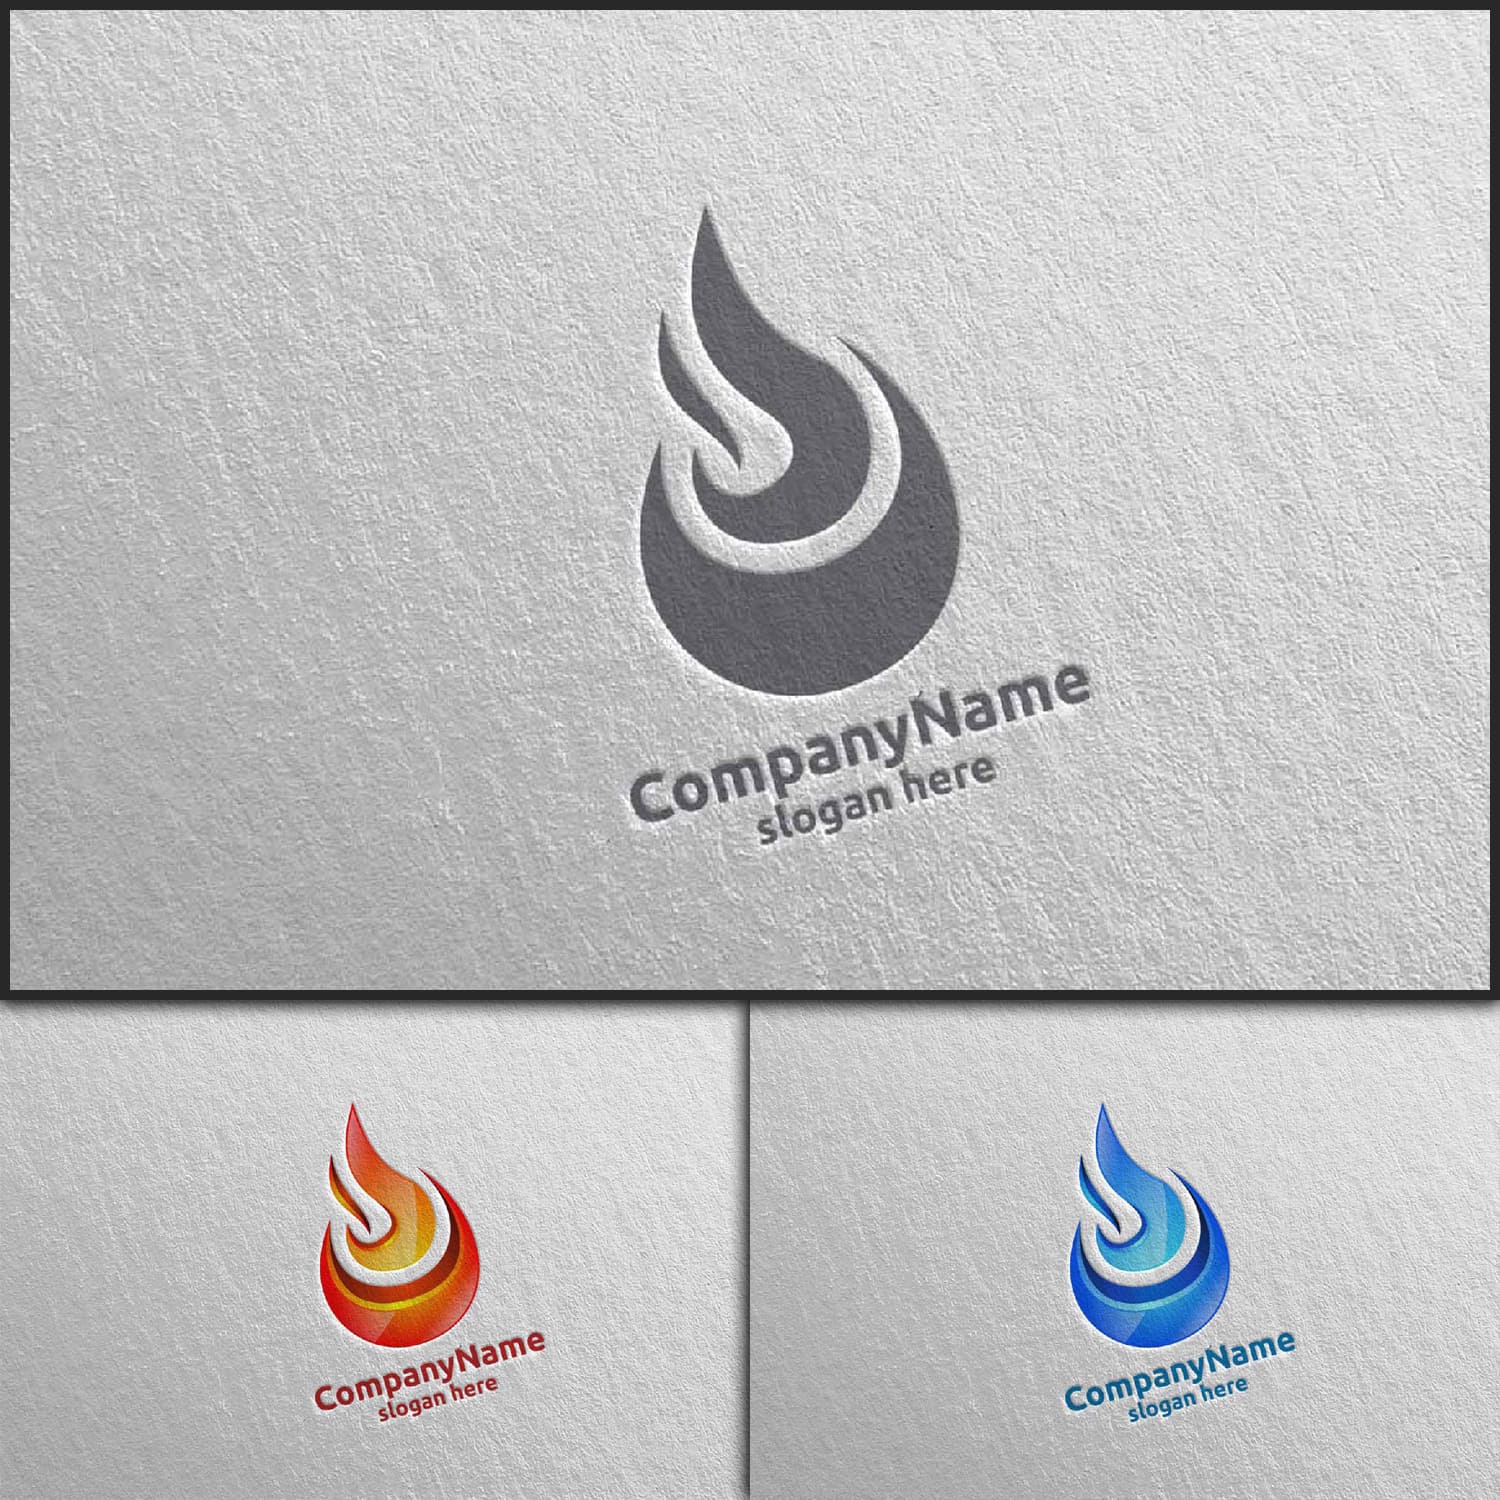 3D Fire Flame Element Logo Design - main image preview.